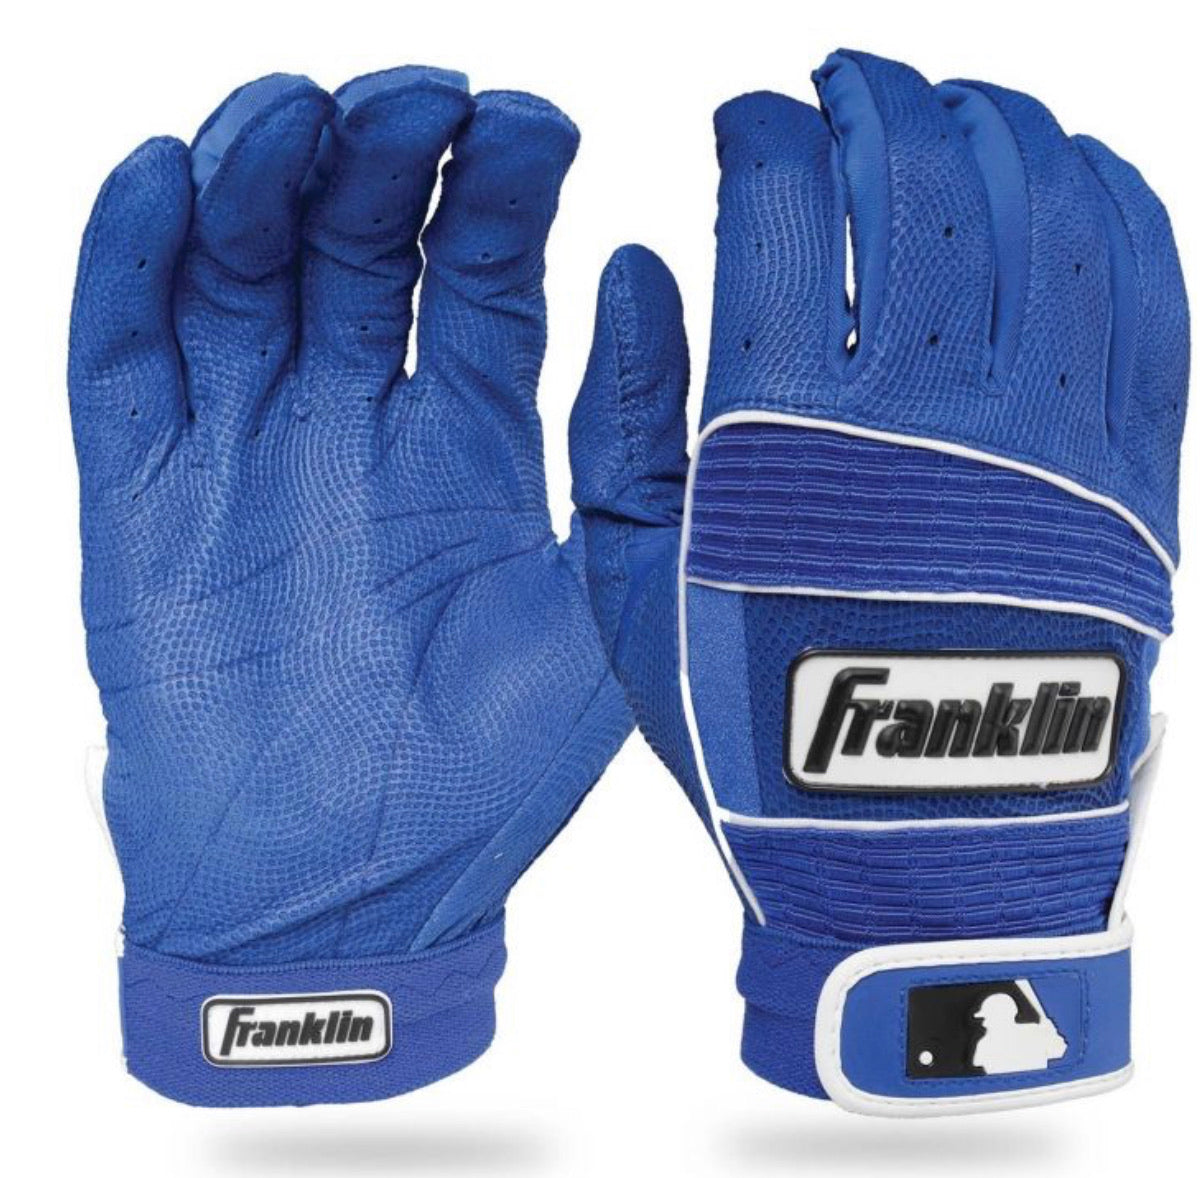 NEO CLASSIC II Batting Gloves by Franklin - AtlanticCoastSports